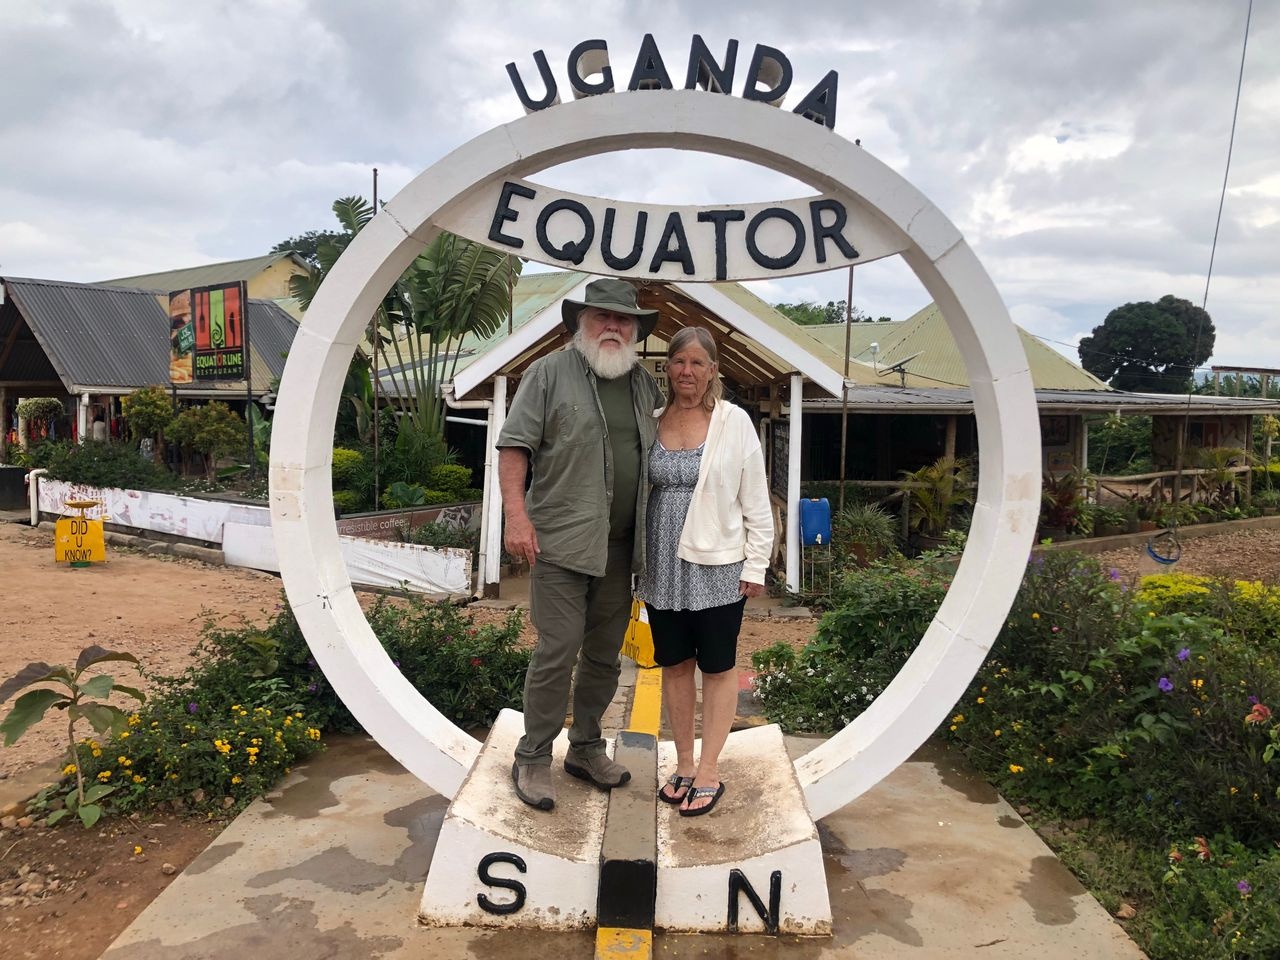 tourhub | Ganyana Safaris | 12 Day Ultimate Uganda Sfarai | Tour Map